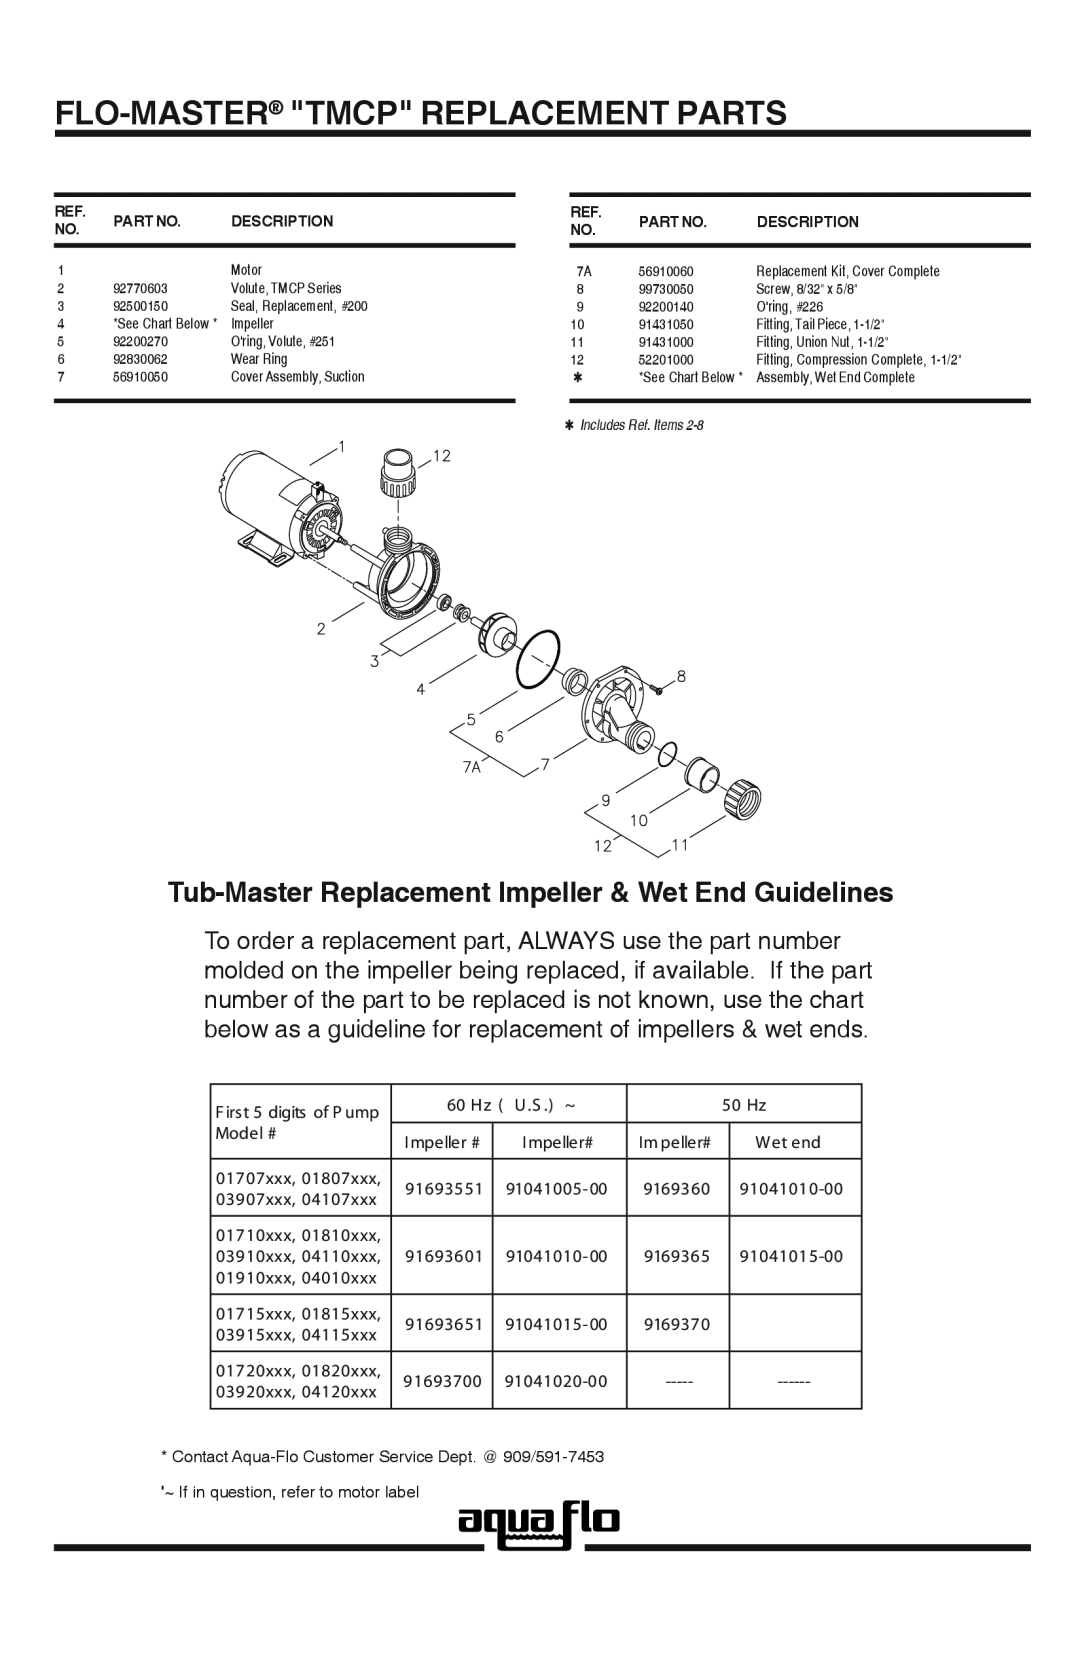 Aqua Flo Tub-Master Series Flo-Master Tmcp Replacement Parts, Tub-Master Replacement Impeller & Wet End Guidelines 